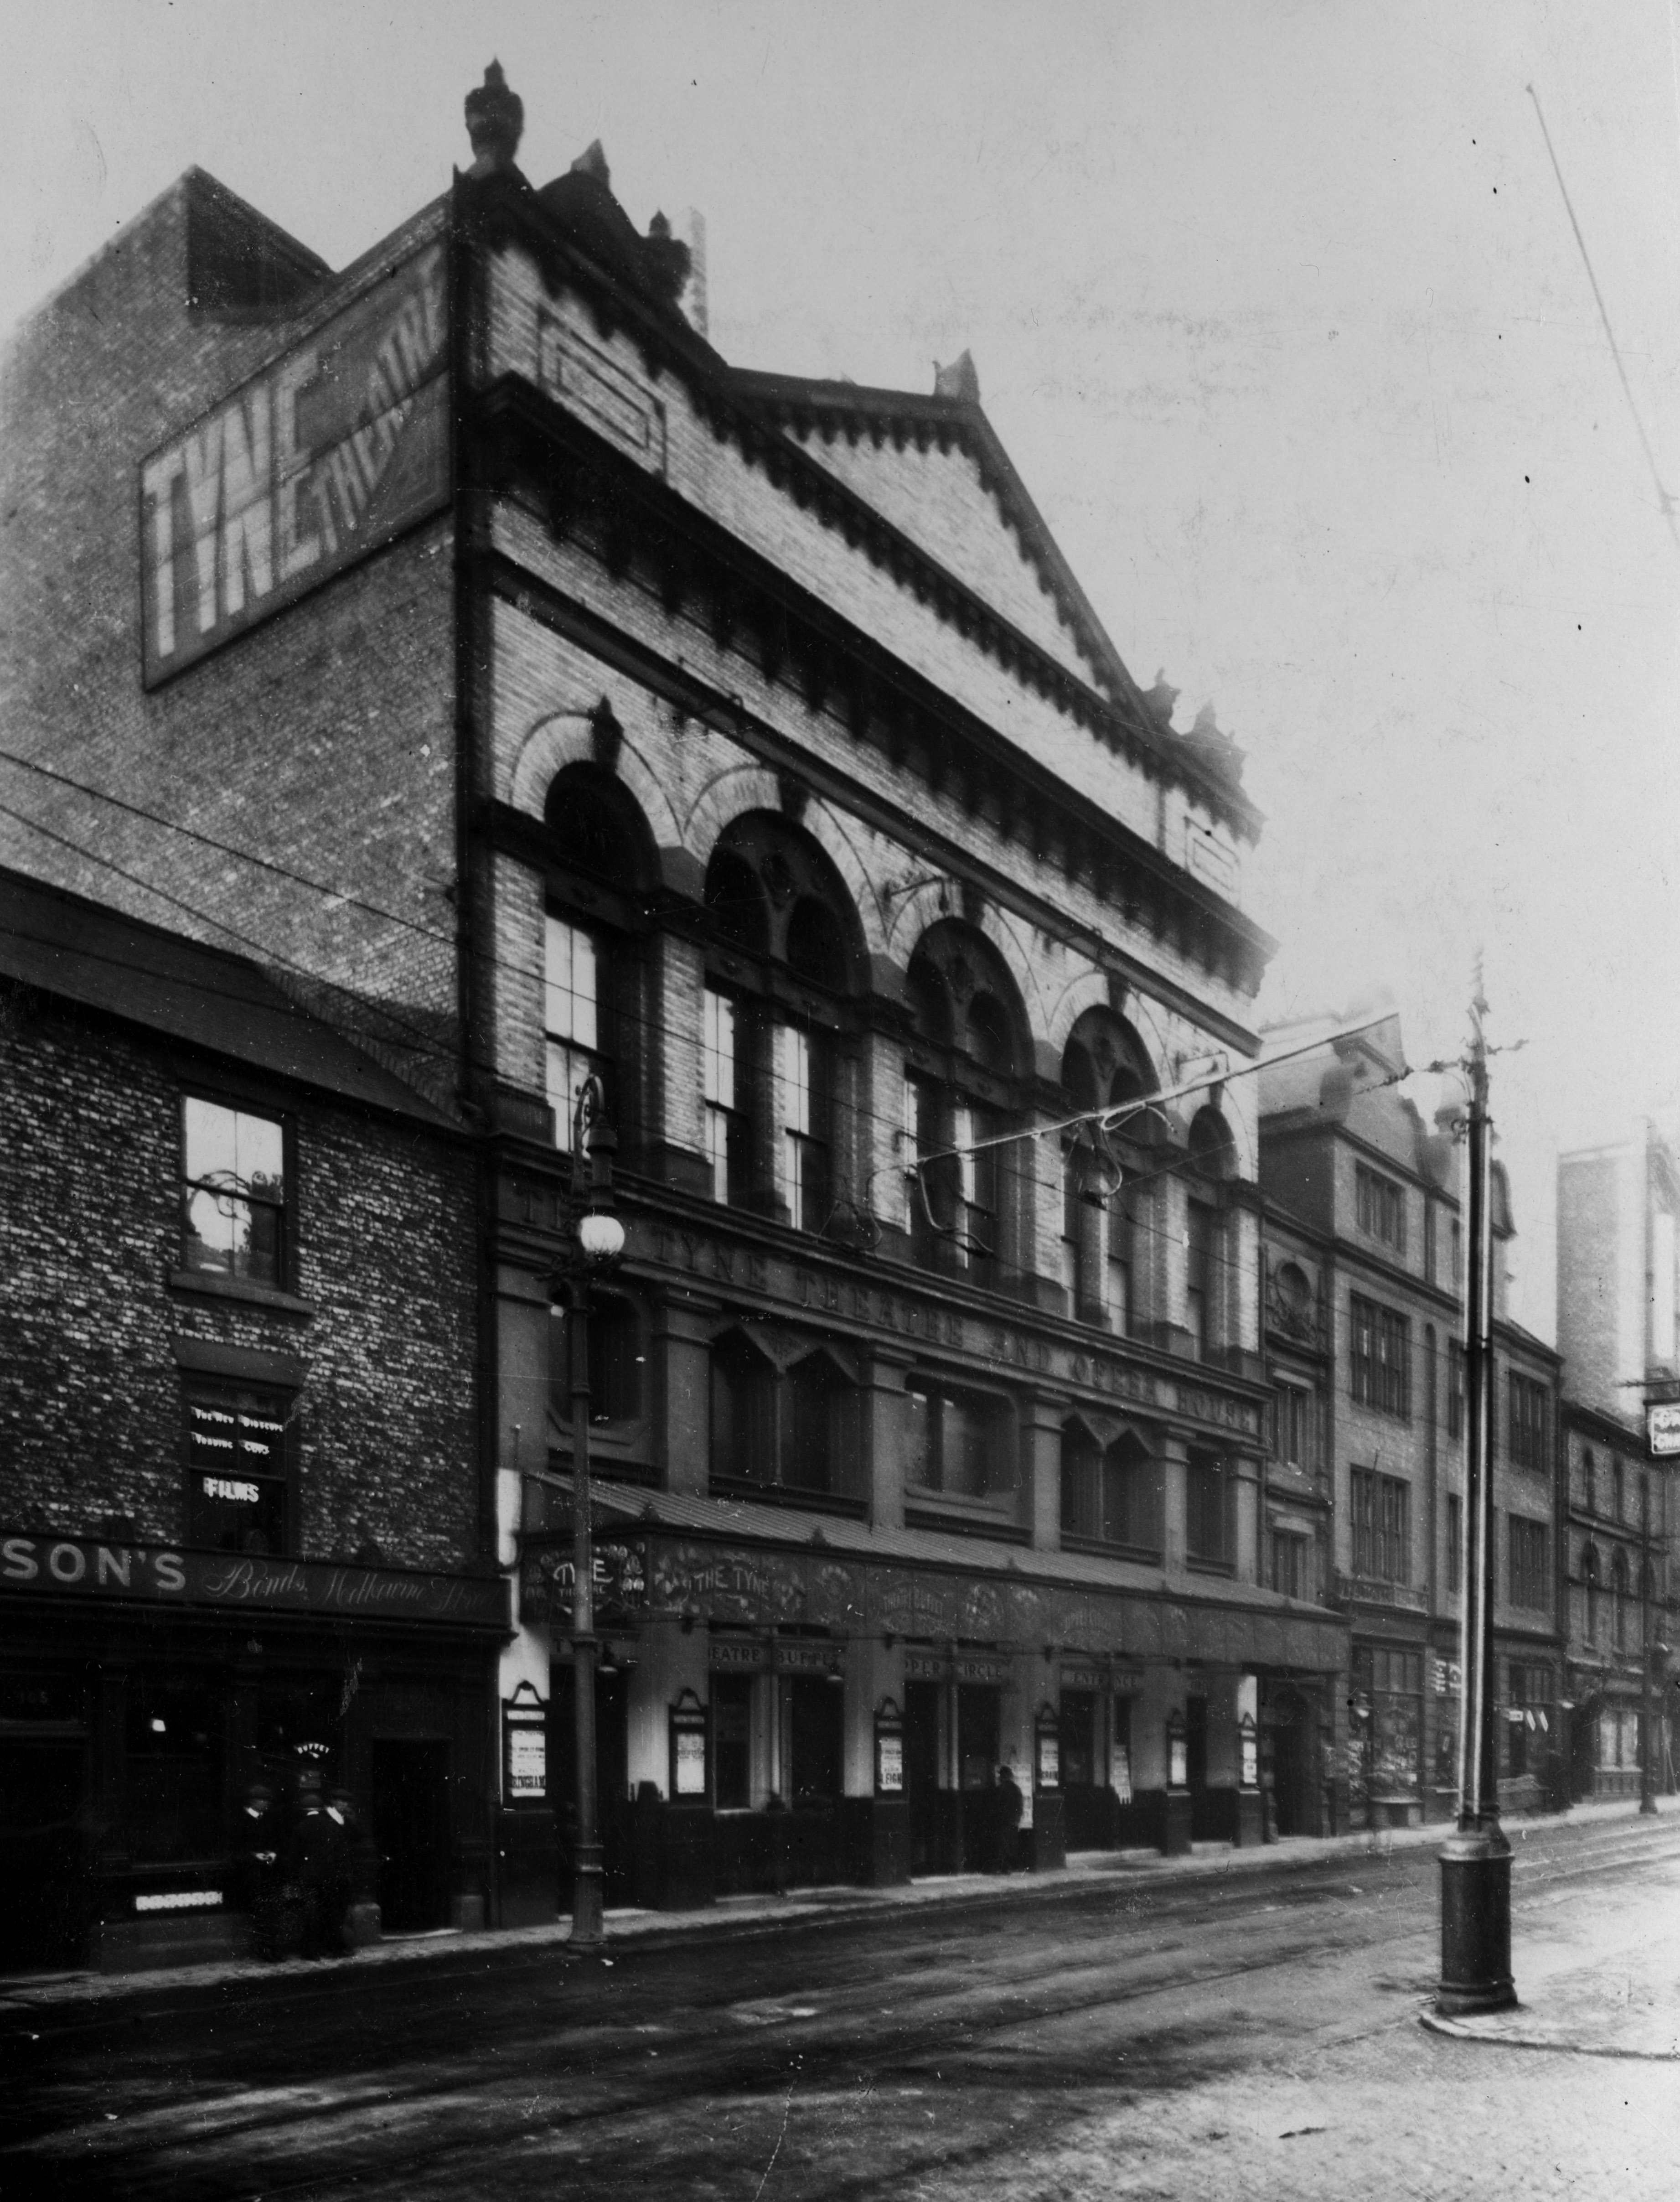 Photograph of Tyne Theatre